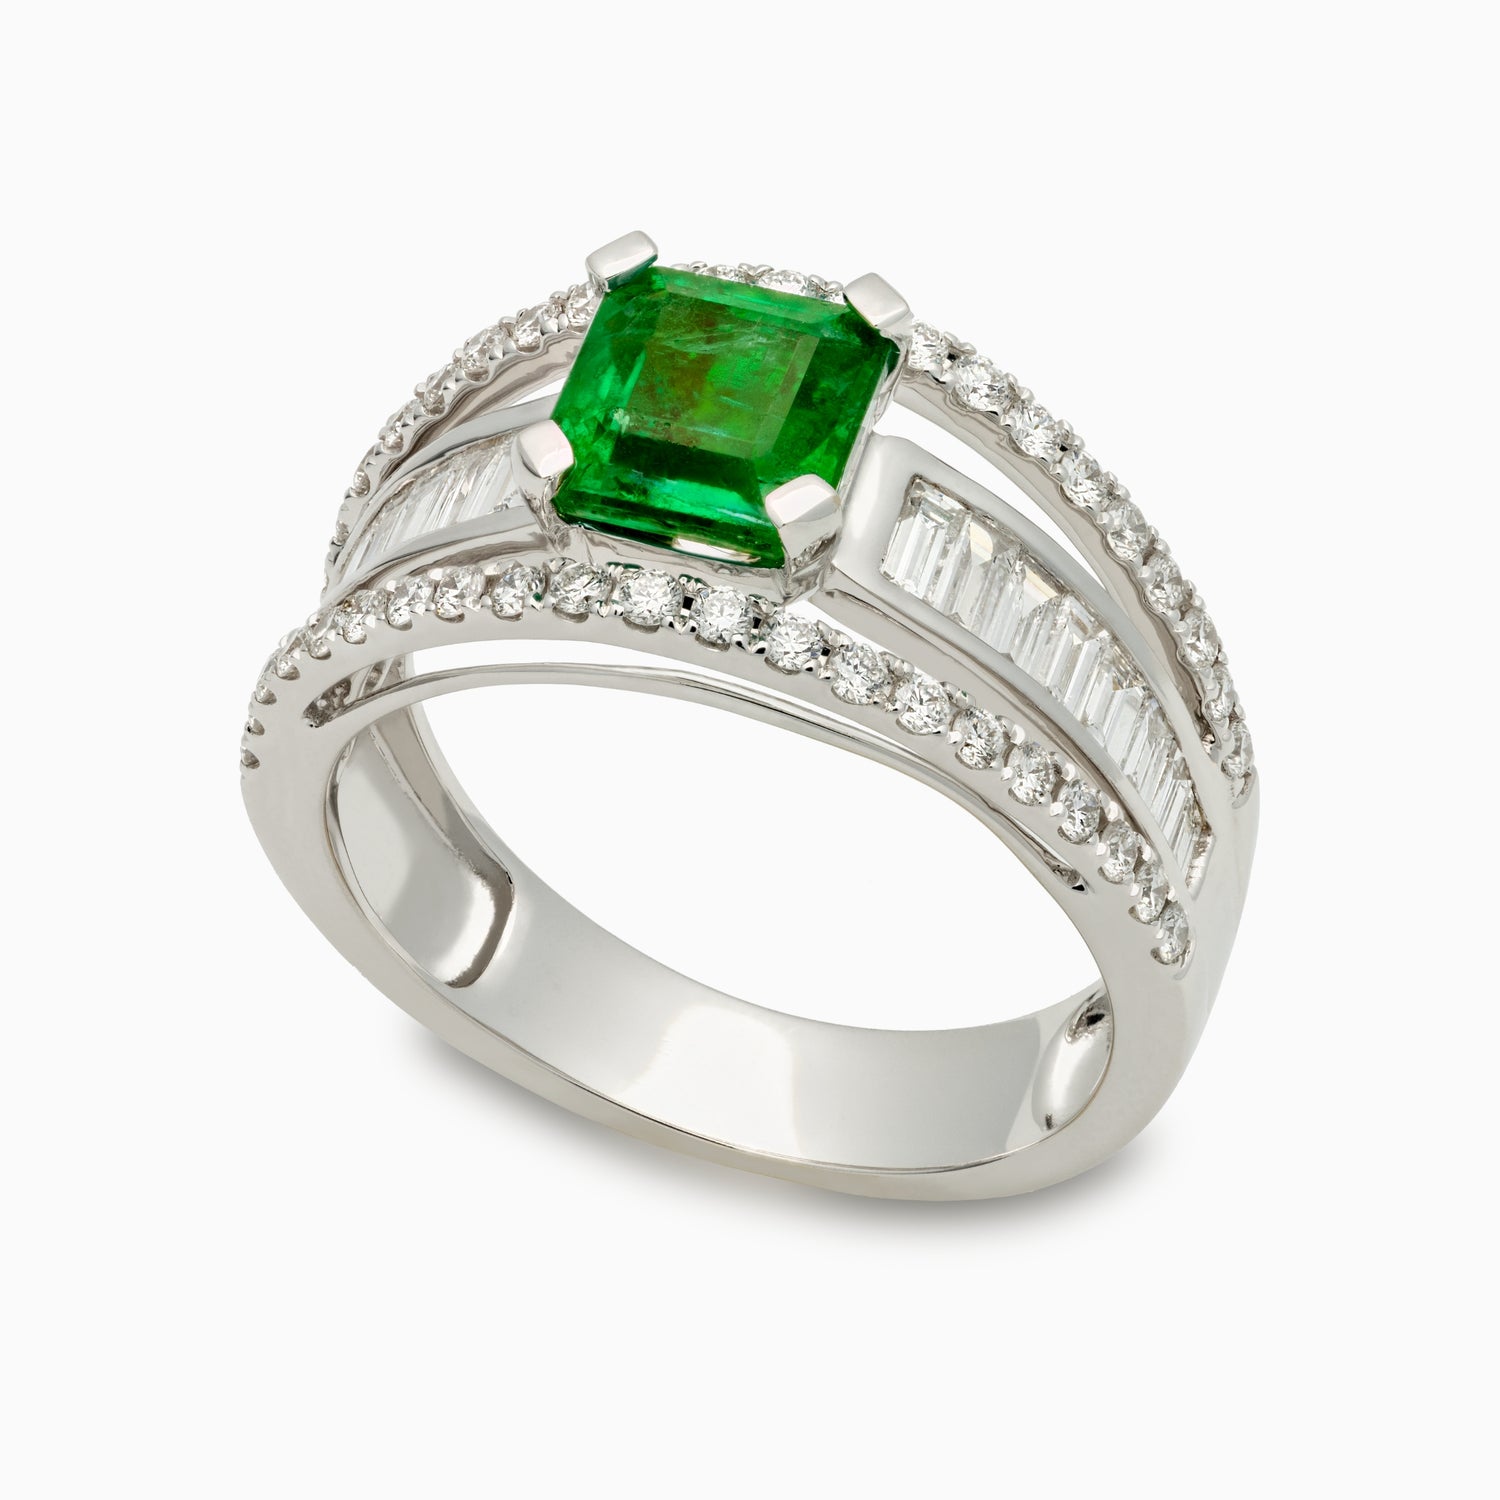 Zambian Emerald Rings